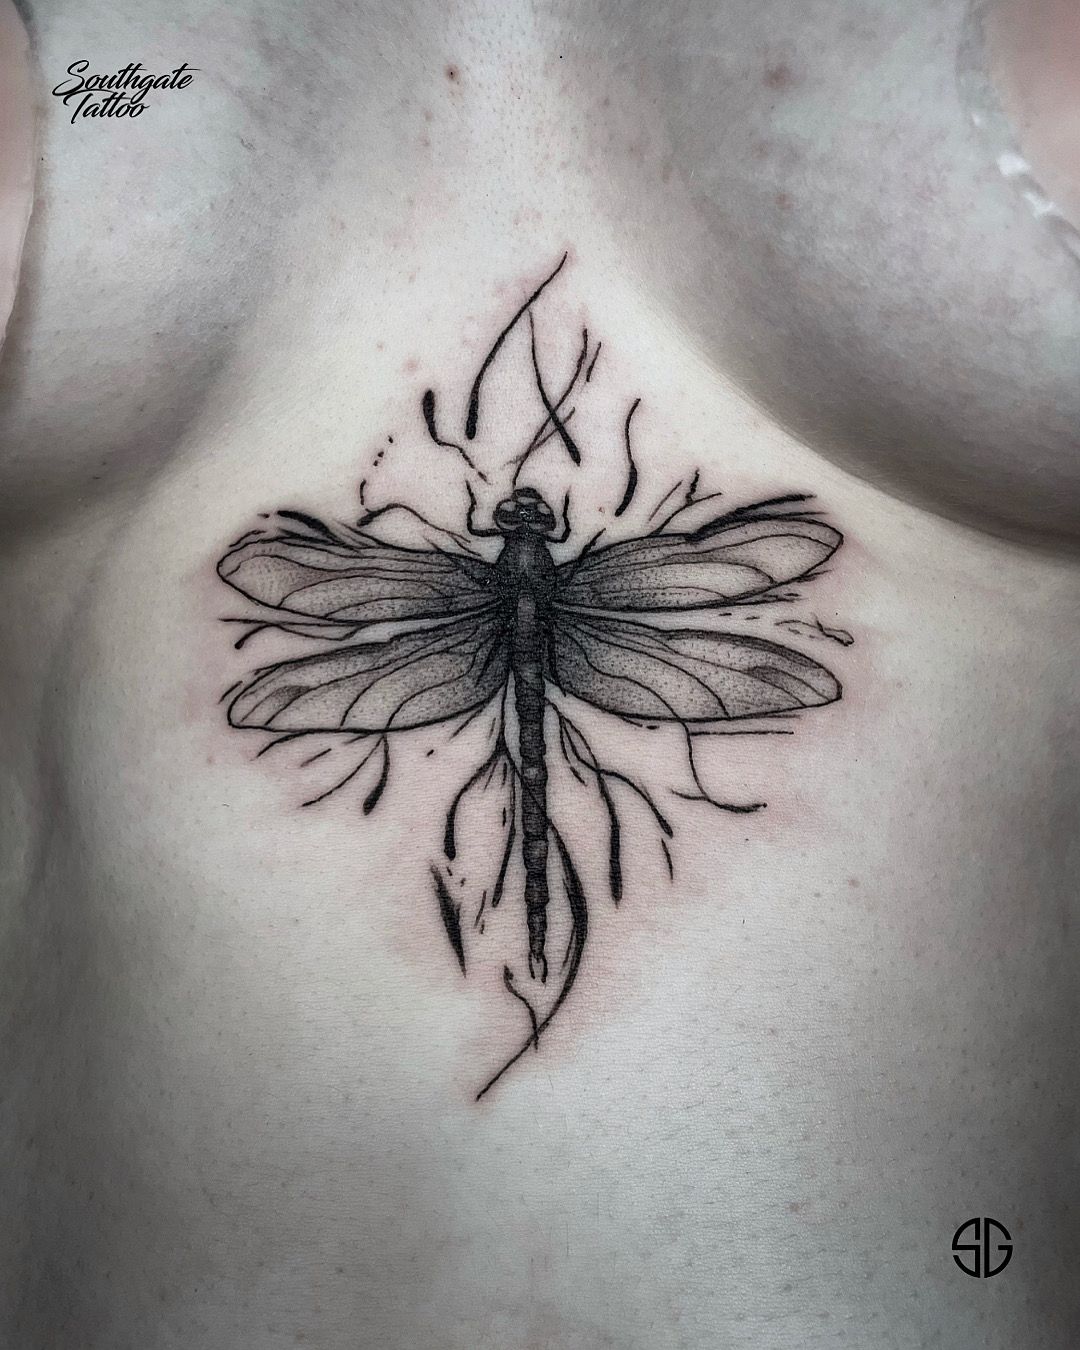 49 Classic Dragonfly Tattoos For Back  Tattoo Designs  TattoosBagcom